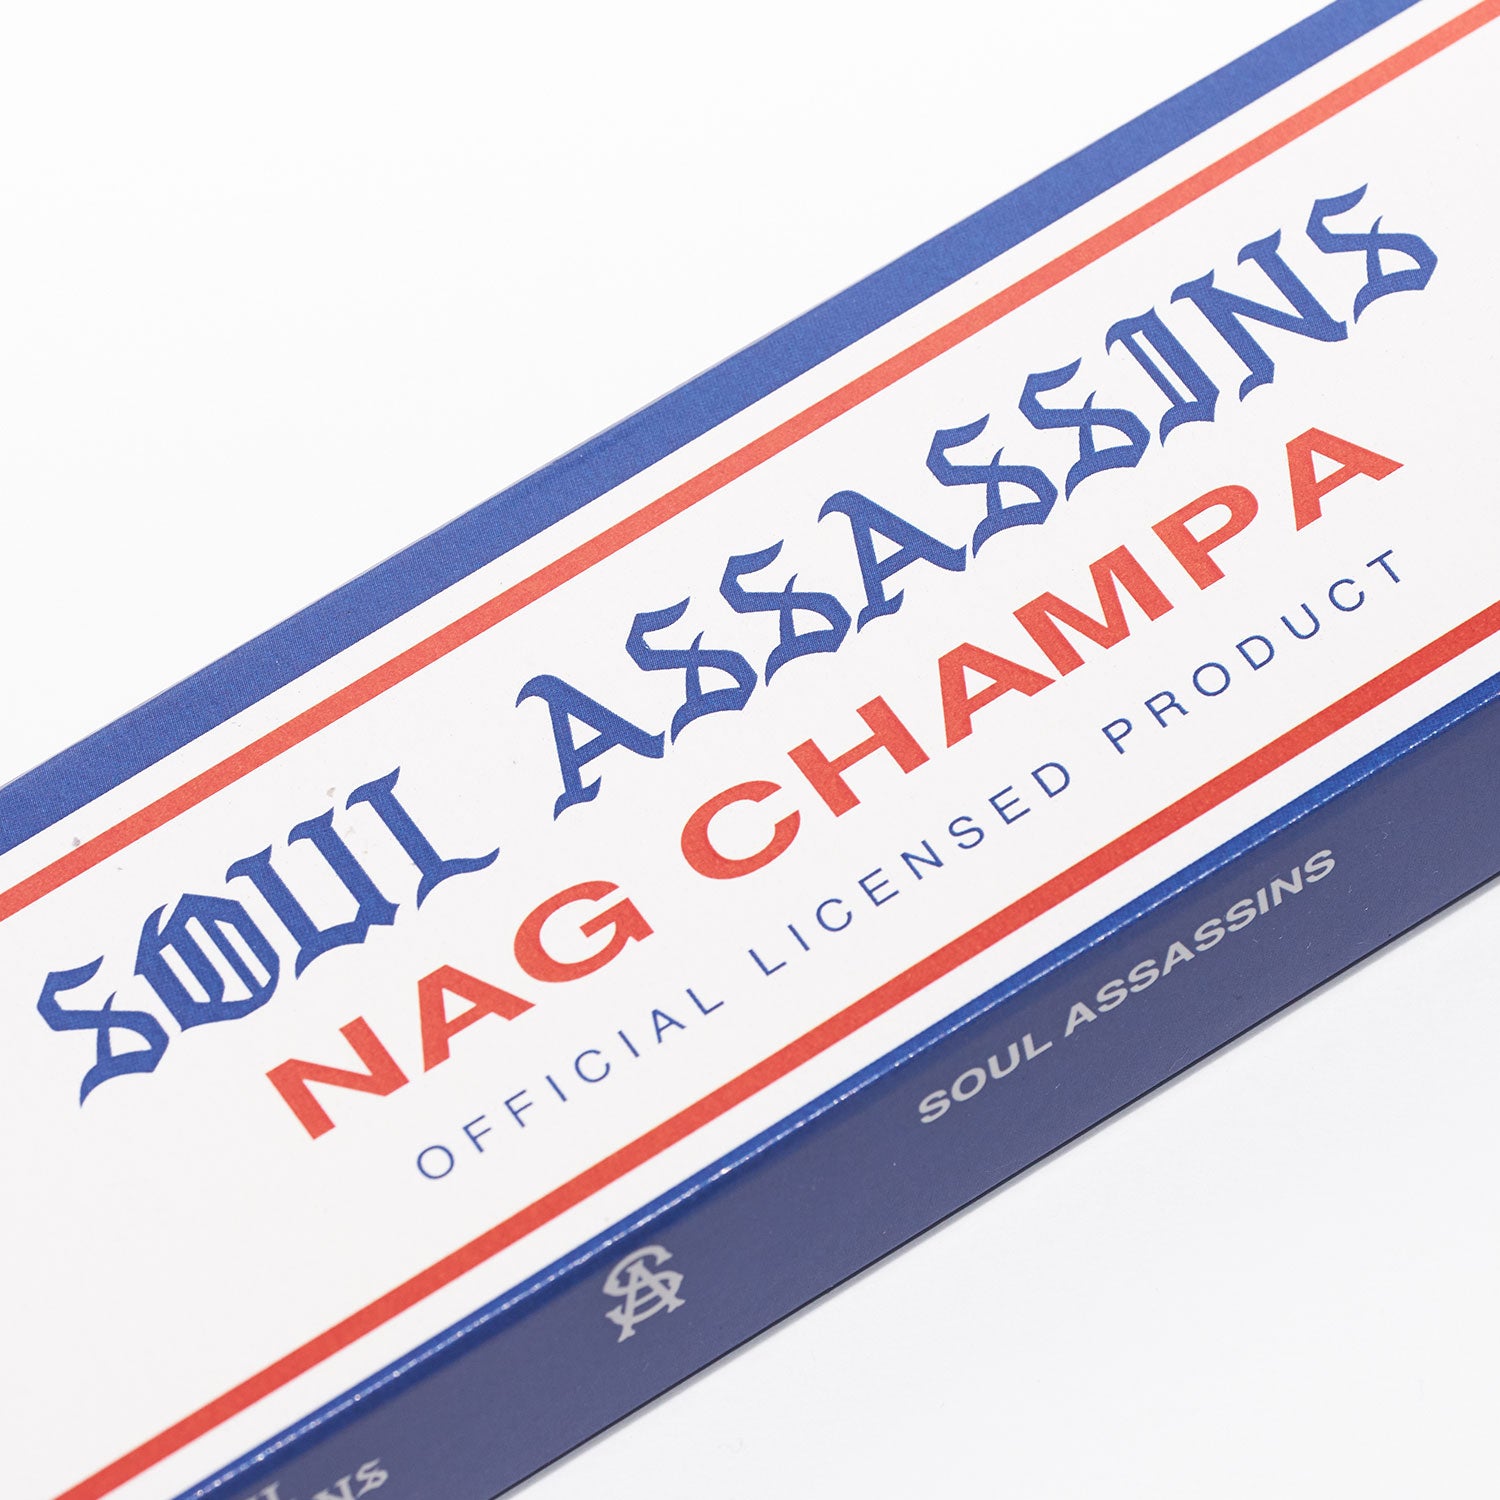 Nag Champa Incense – Soulfulvibesco